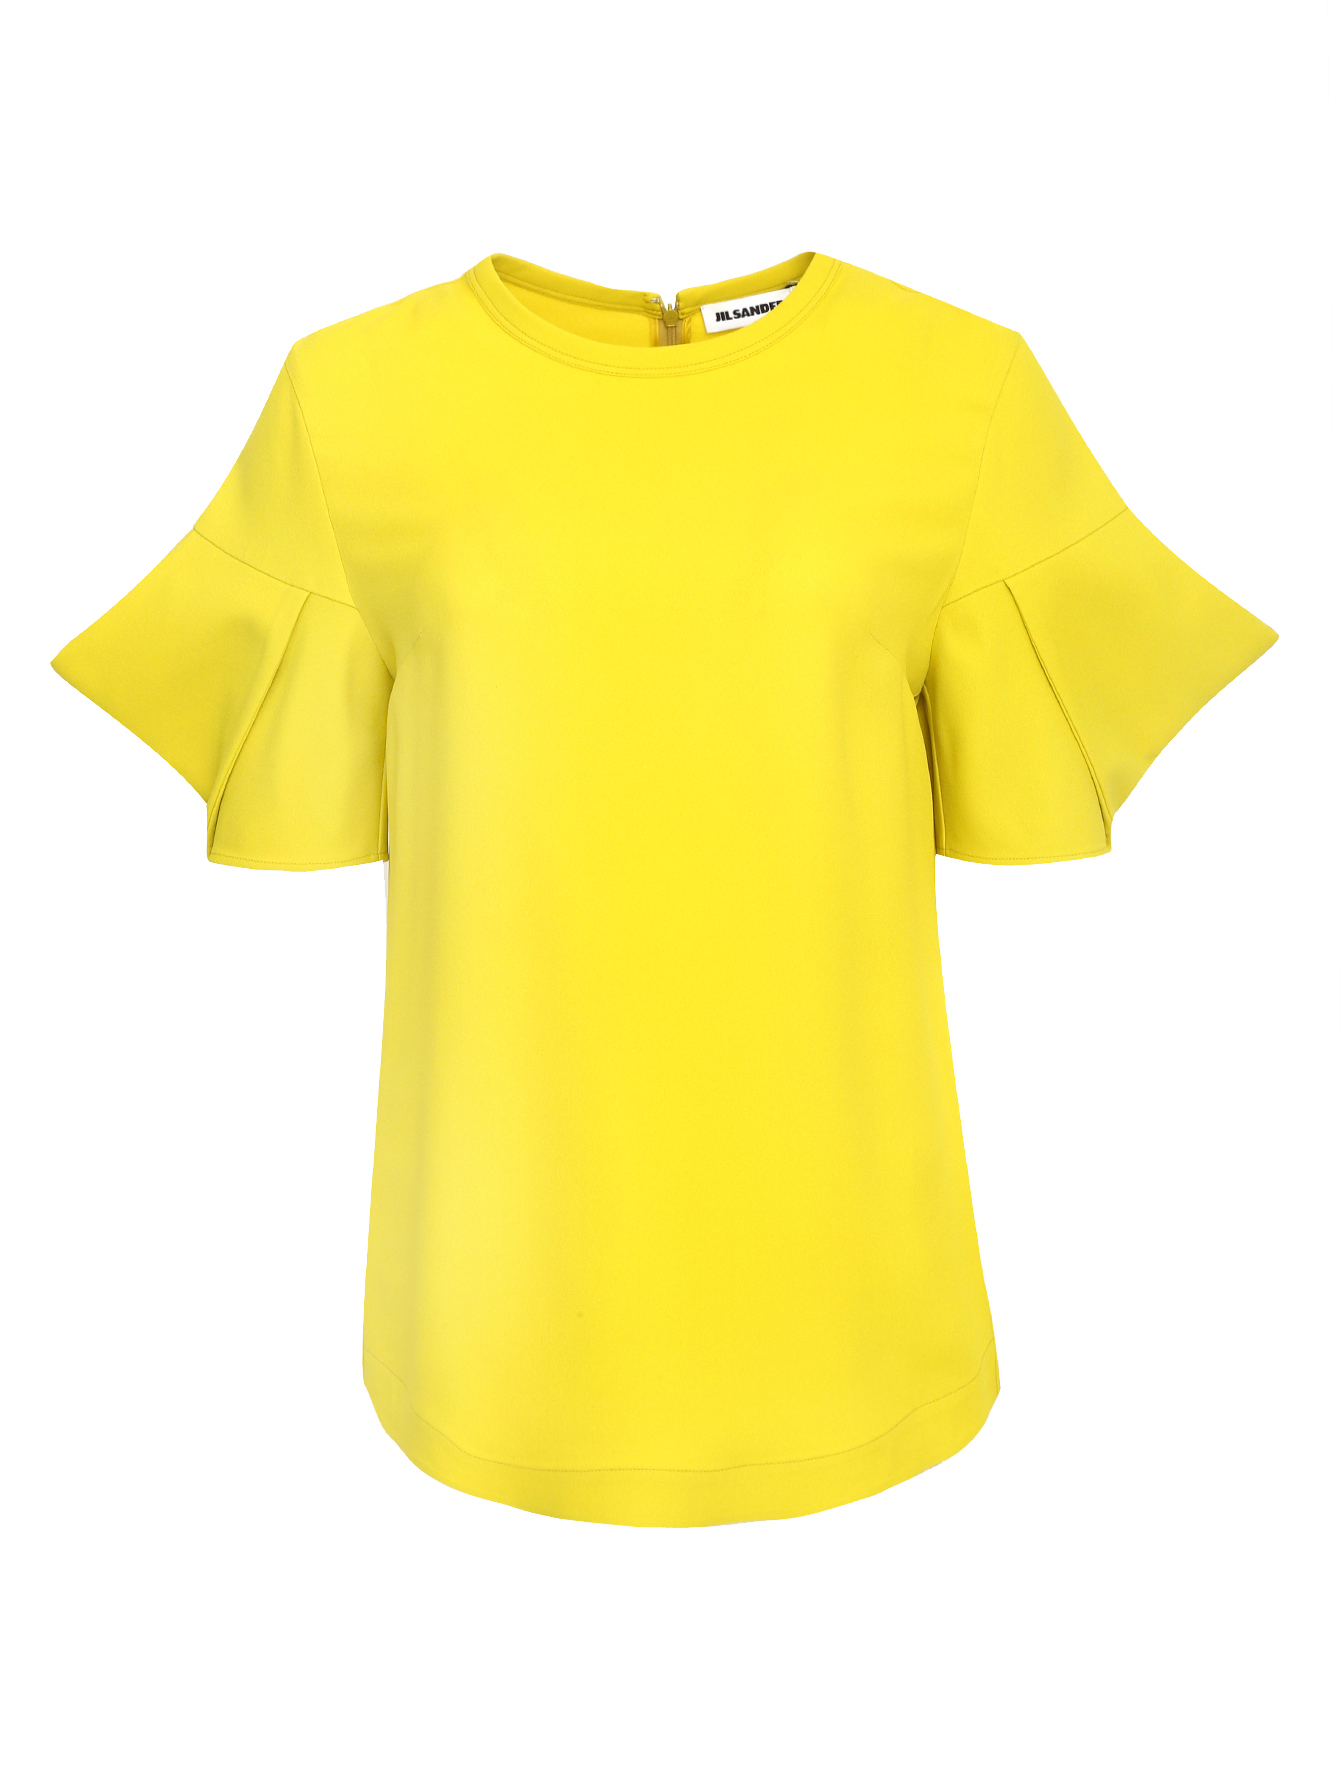 Блузки с коротким рукавом на вайлдберриз. Желтая блузка. Блузки желтого цвета. Блузка женская желтая. Желтая блузка с коротким рукавом.